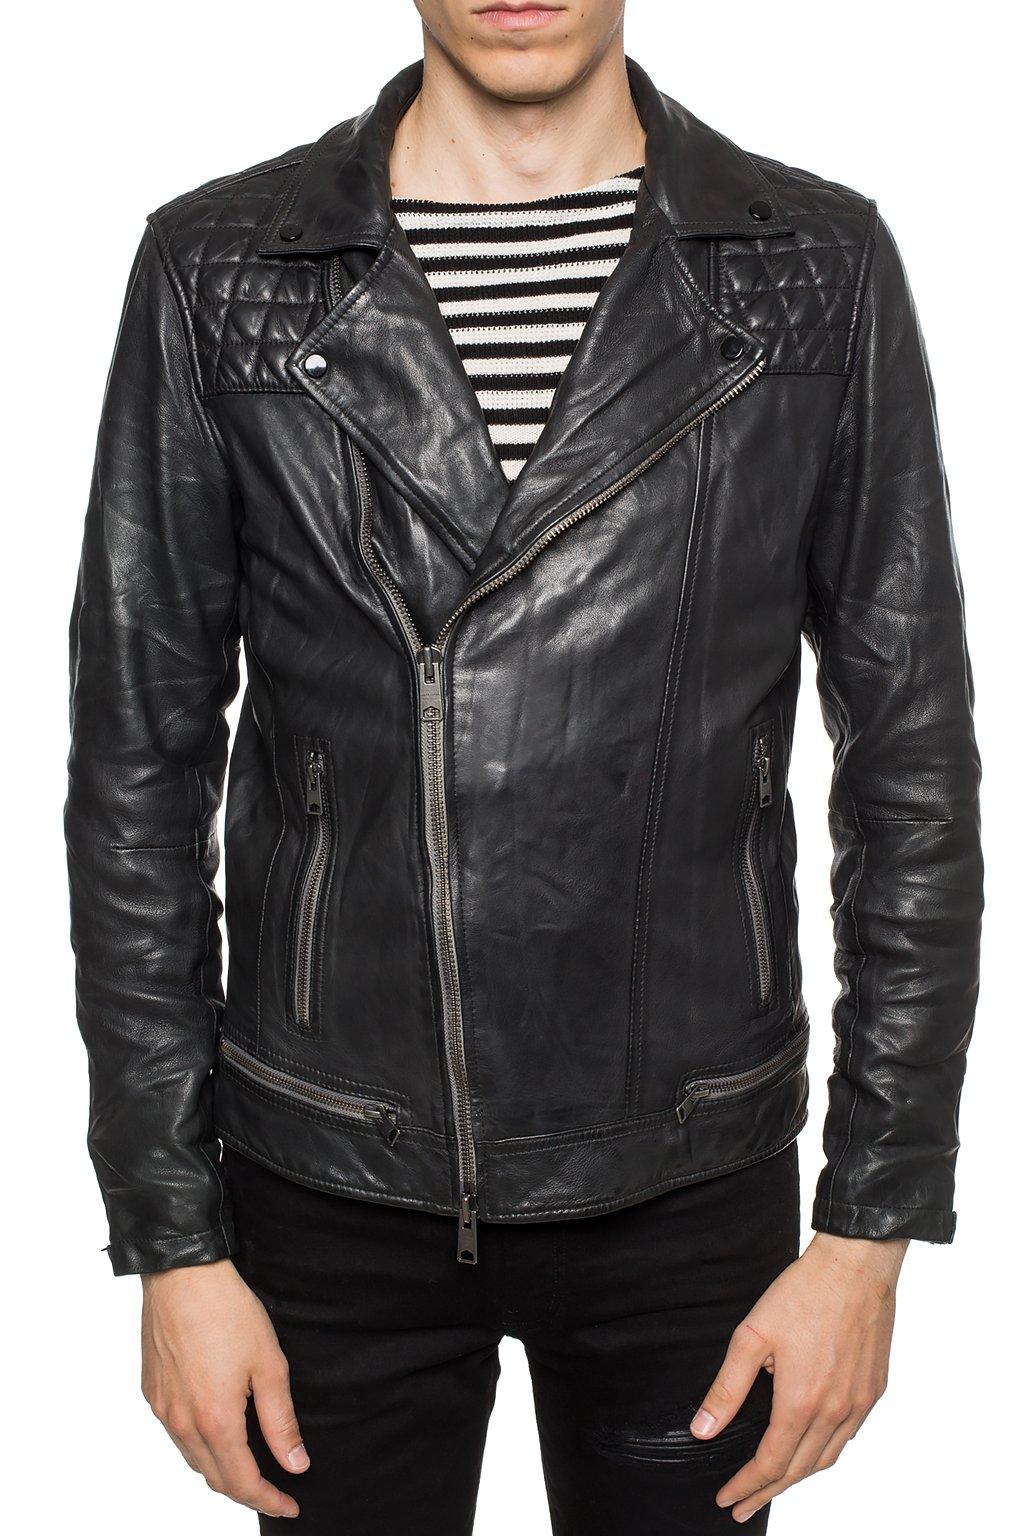 AllSaints 'conroy' Leather Jacket in Black for Men - Lyst